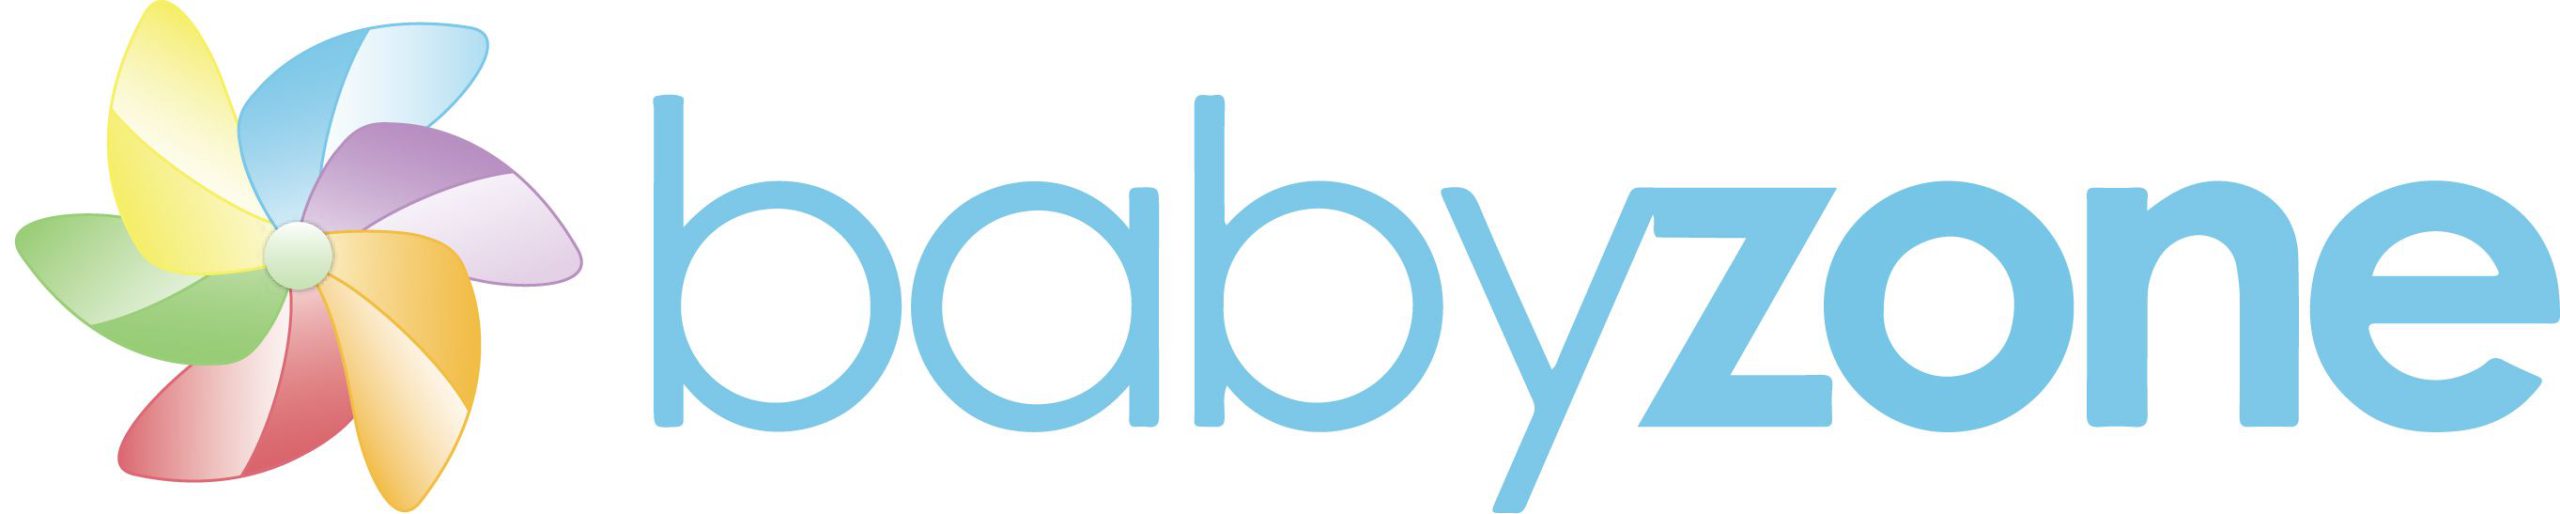 logo babyzone high